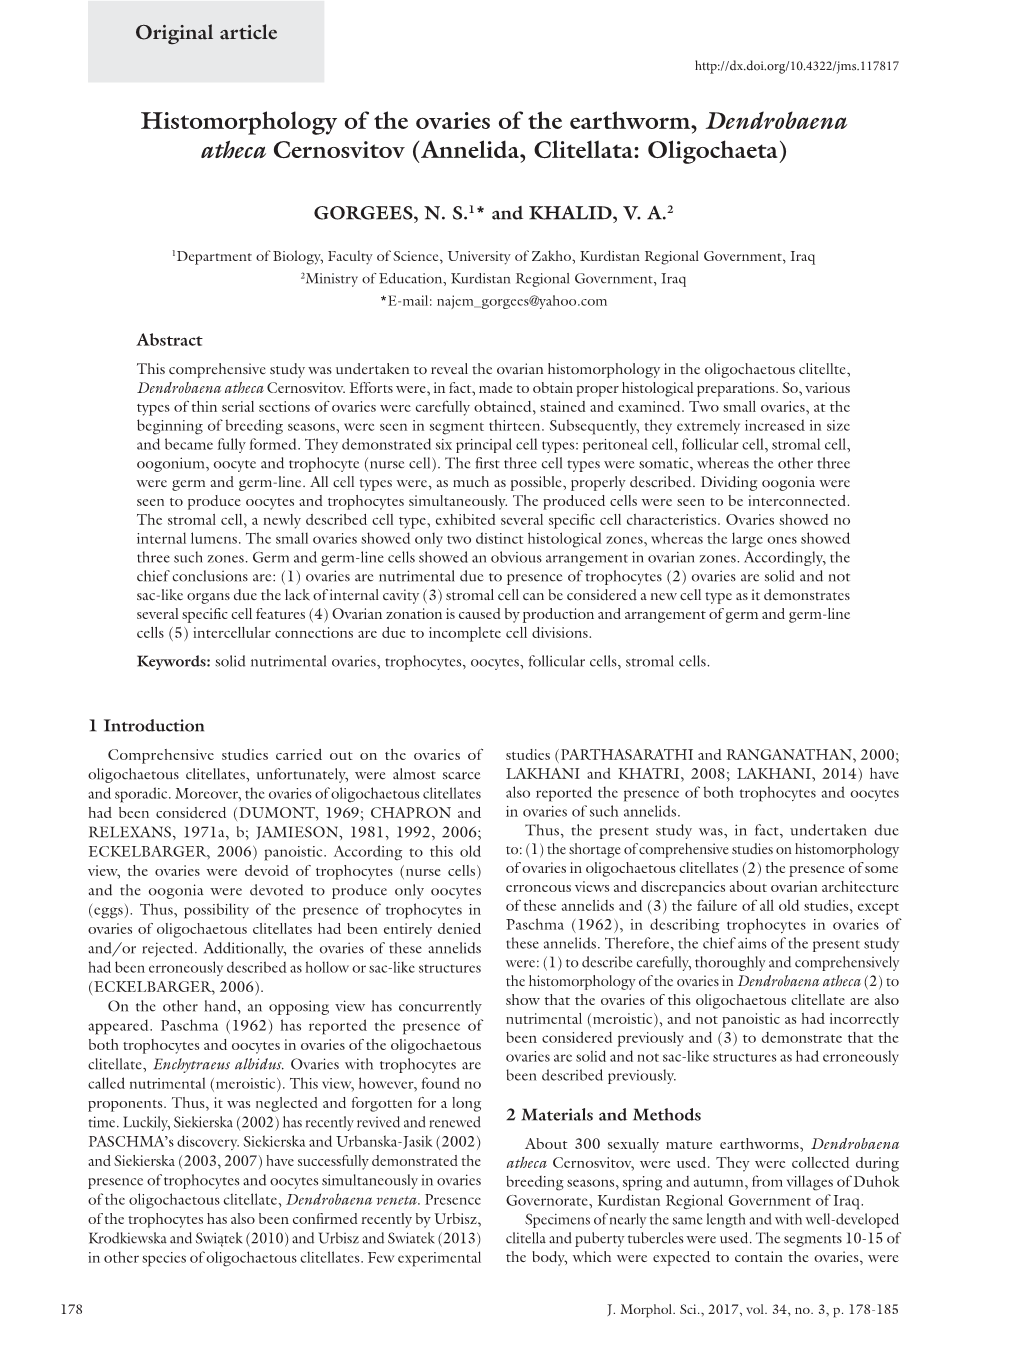 Histomorphology of the Ovaries of the Earthworm, Dendrobaena Atheca Cernosvitov (Annelida, Clitellata: Oligochaeta)